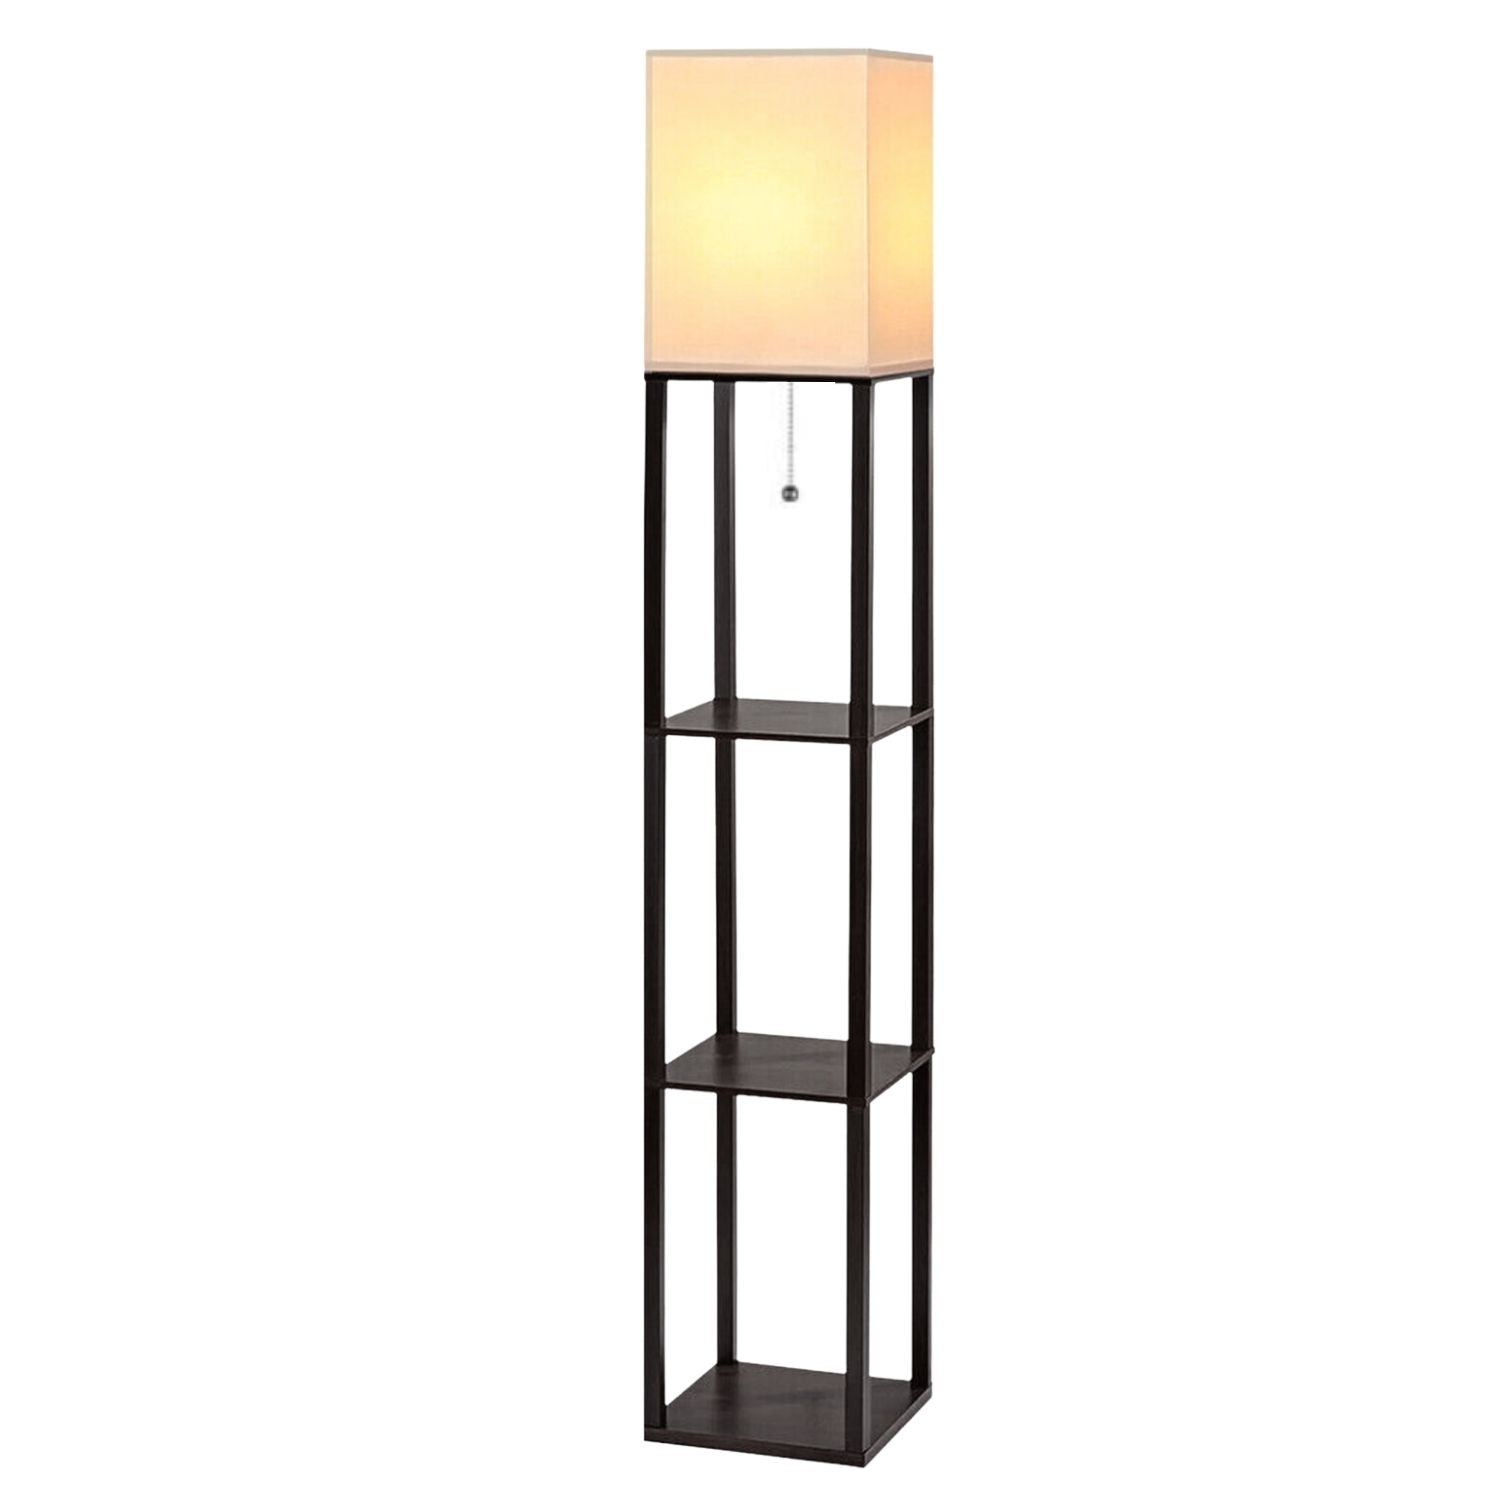 EKKIO Frameless Floor Vintage Lamp Shelf 160CM (Black)